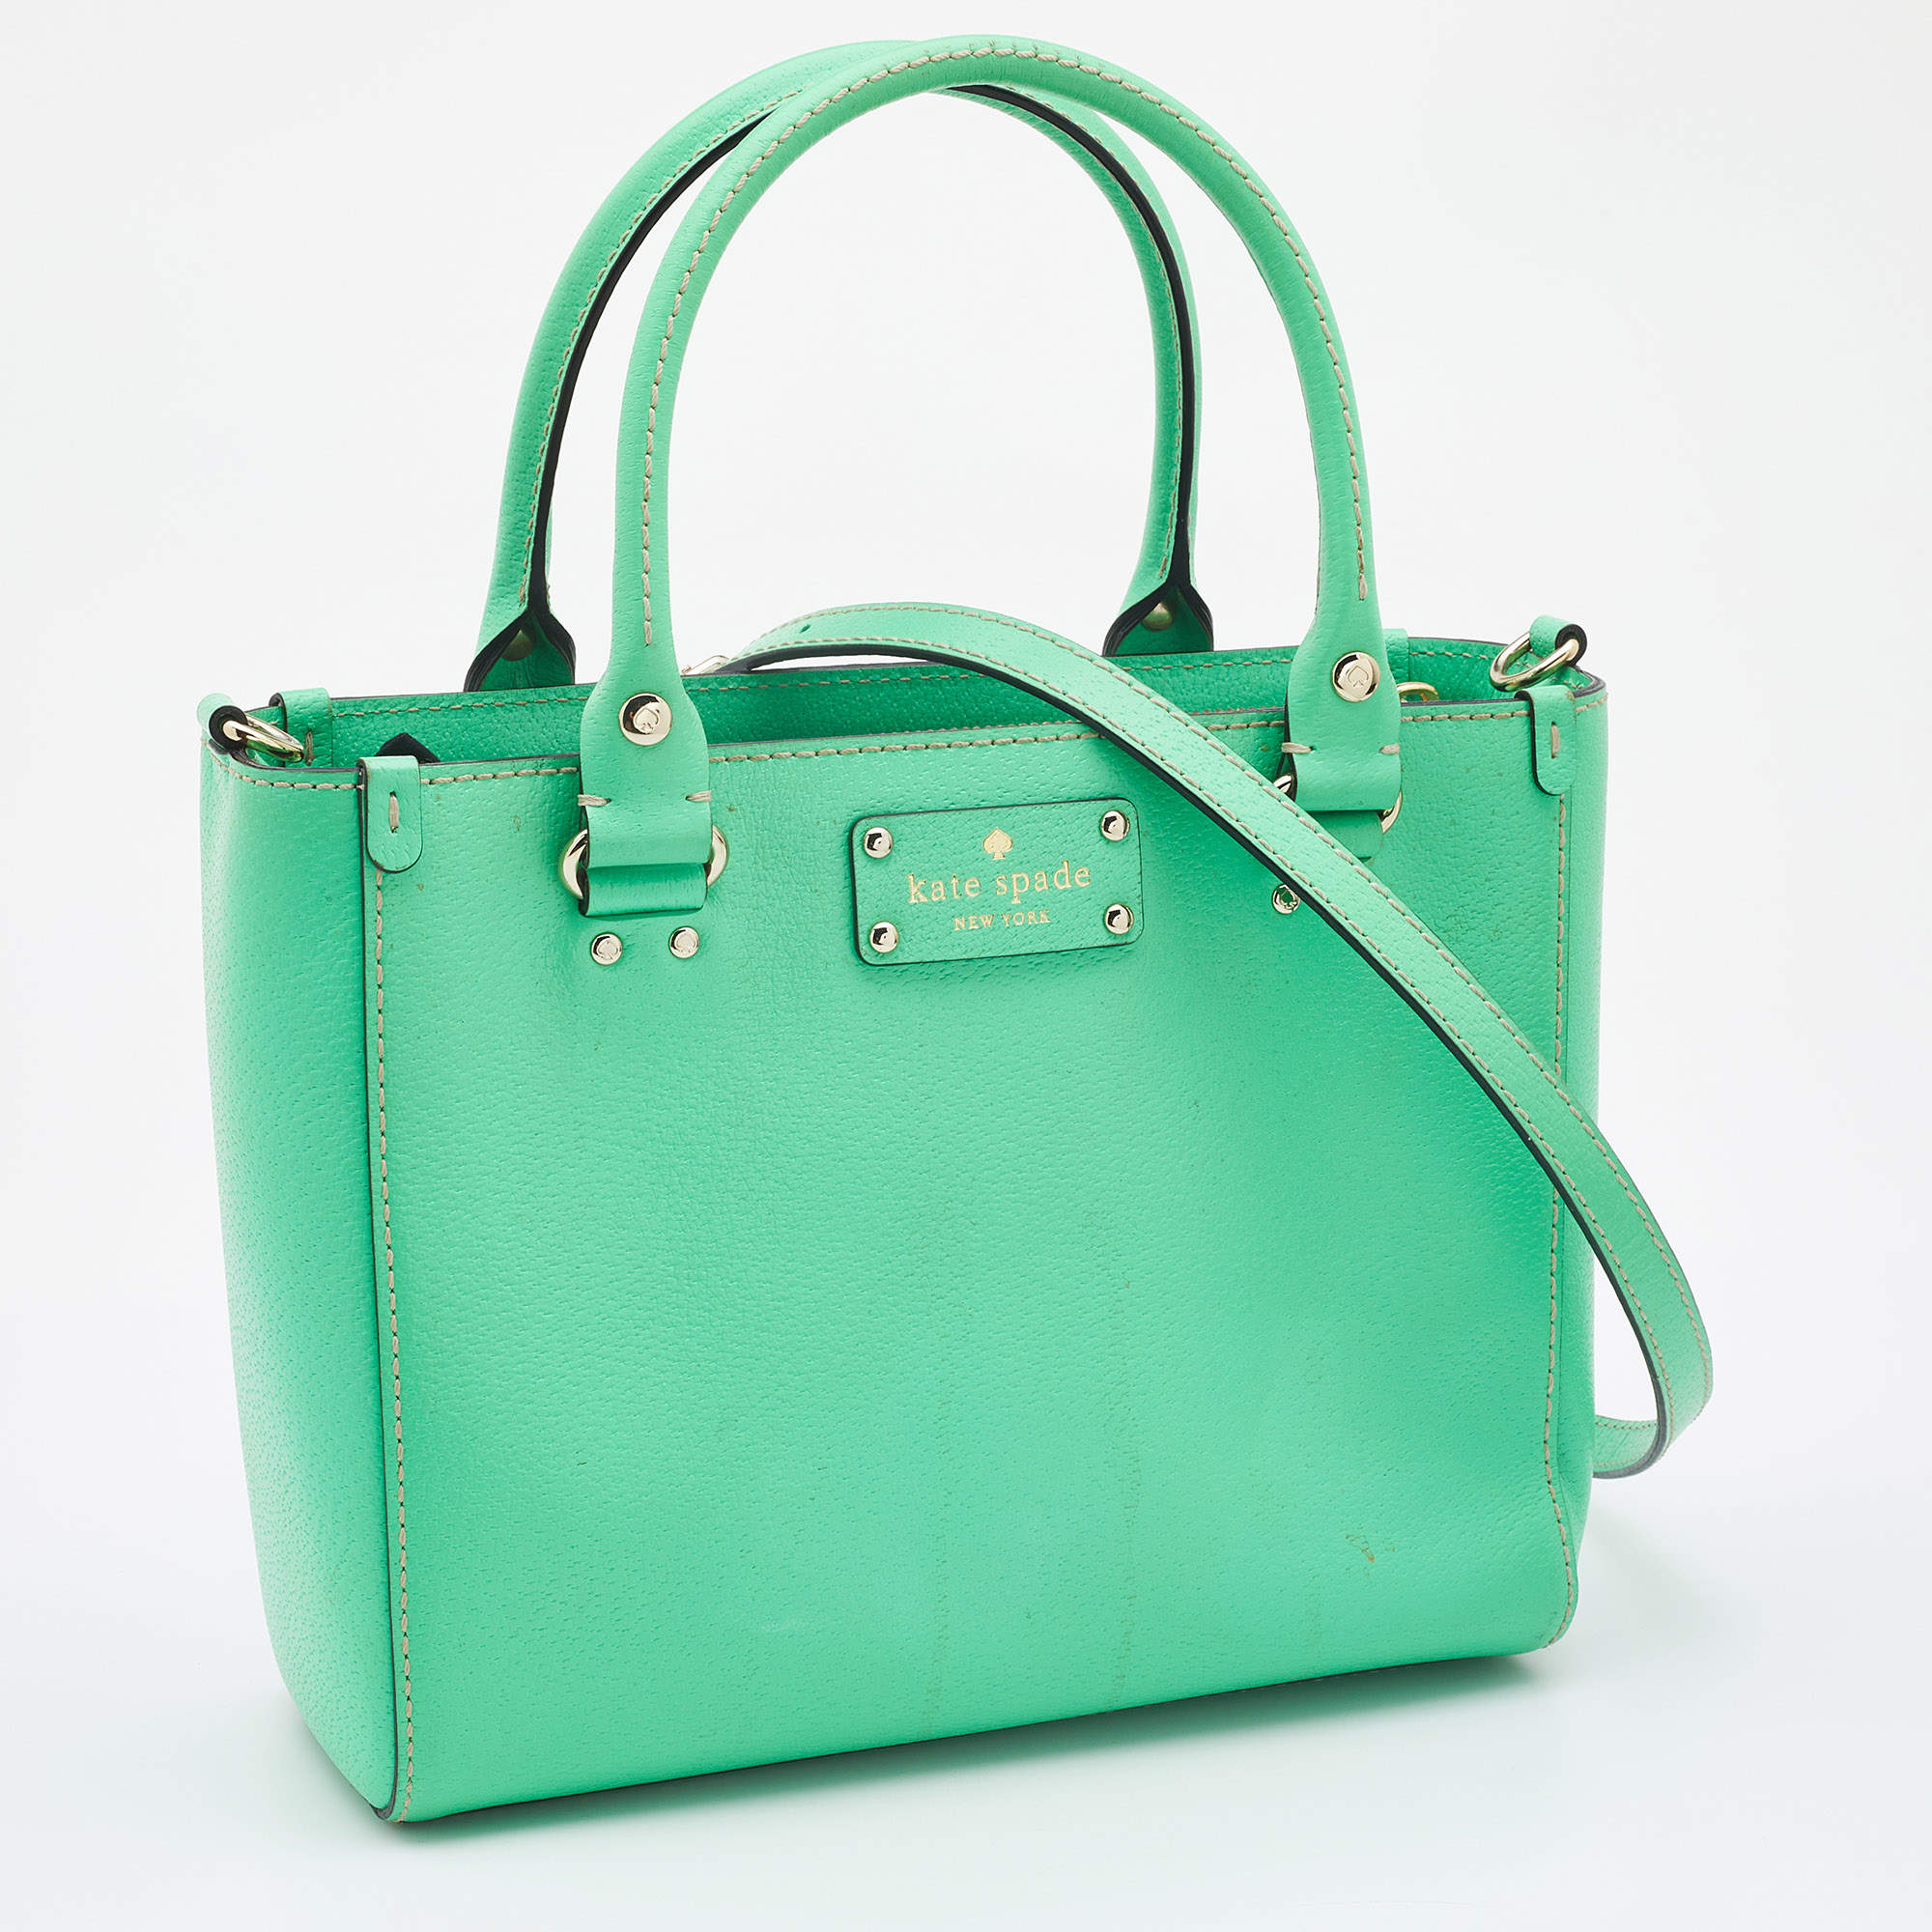 Kate Spade Shoulder Bag Purse - Turquoise / Pastel Aqua Blue / Green |  Purses and bags, Kate spade shoulder bag, Pretty bags